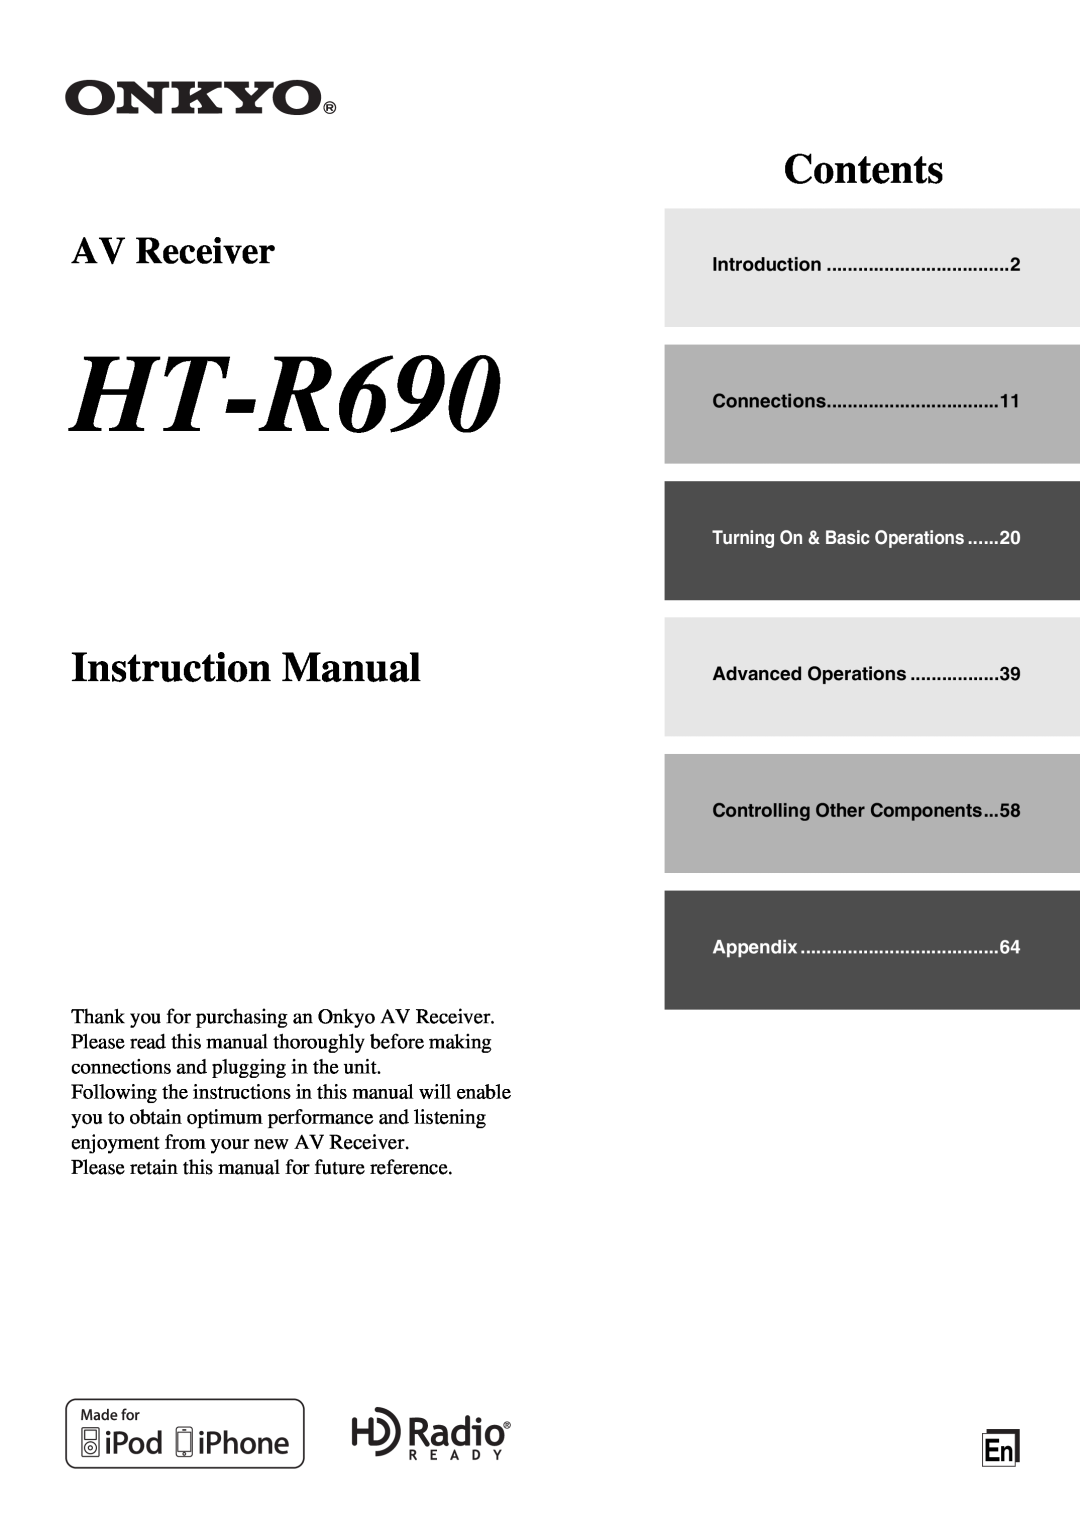 Onkyo HT-R690 instruction manual Instruction Manual, Contents, AV Receiver 